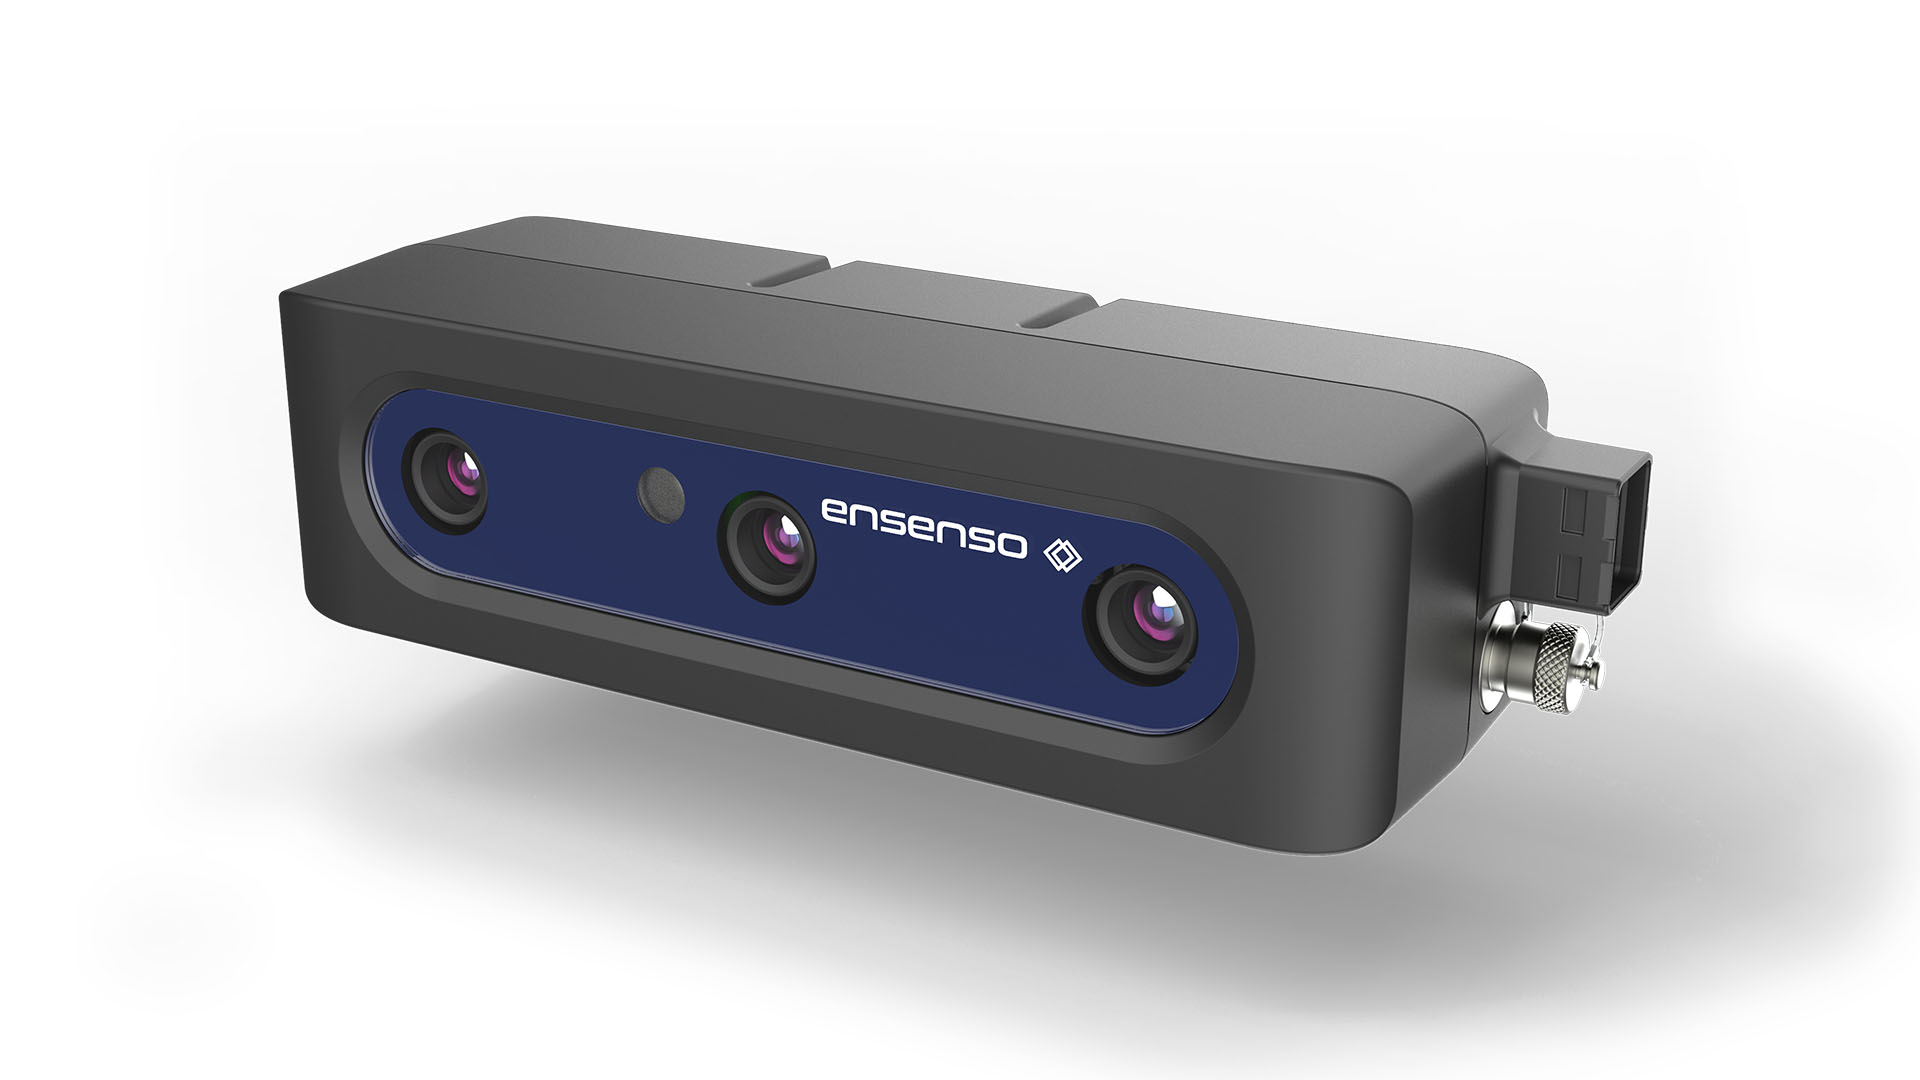 Stereo-3D-Kamera - Industrial Design / Mechanical Design für Ensenso GmbH